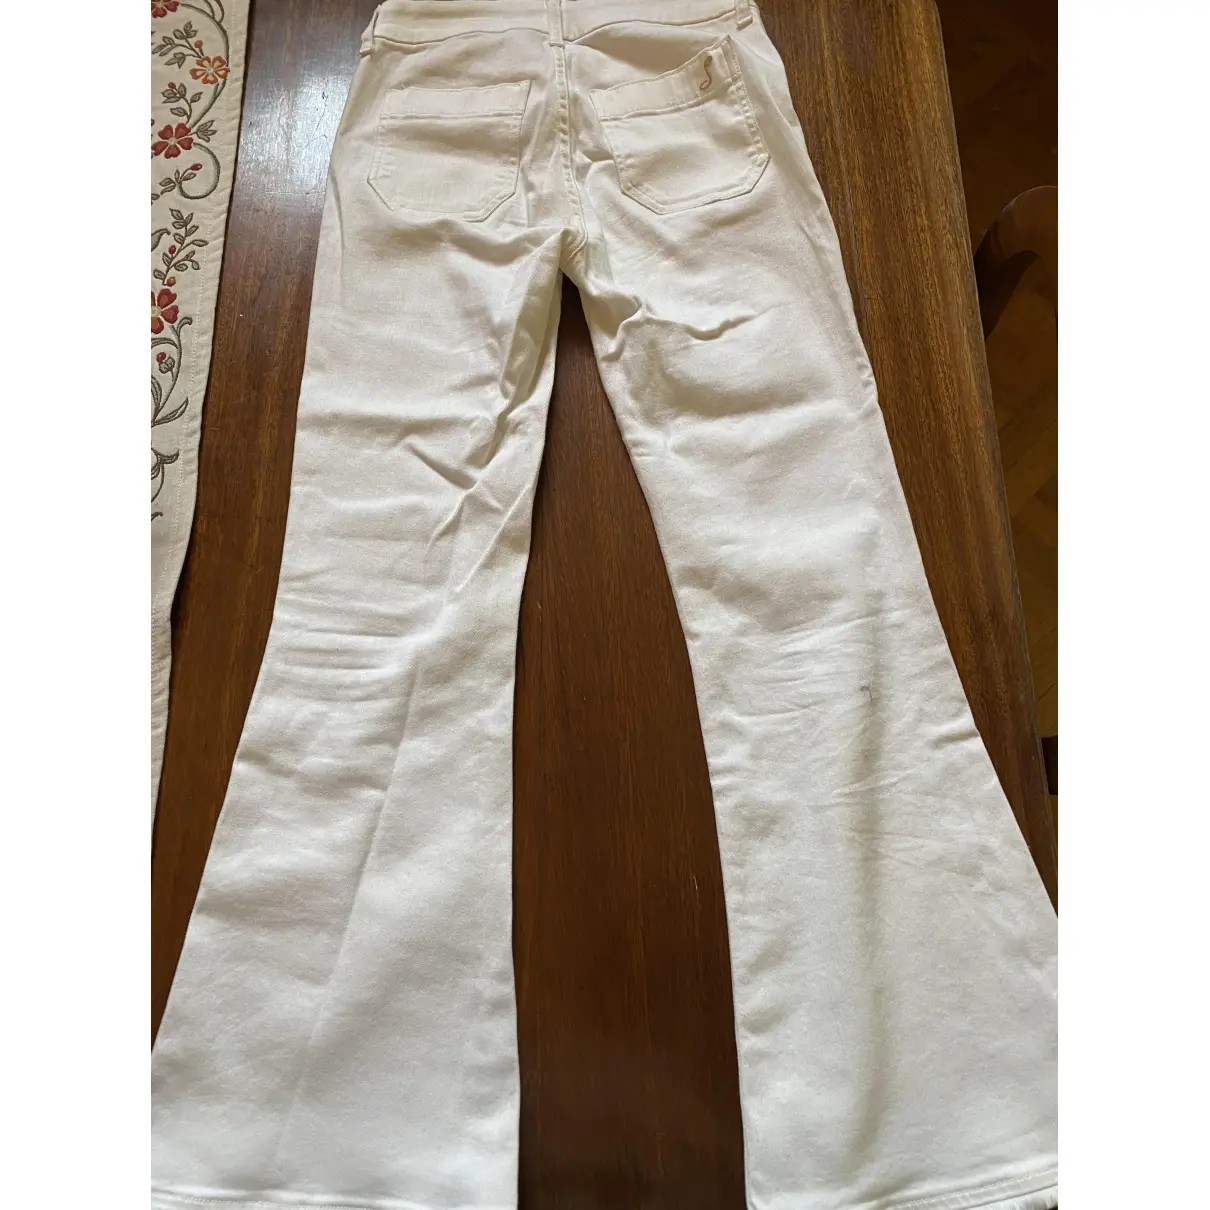 Buy Seafarer White Cotton - elasthane Jeans online